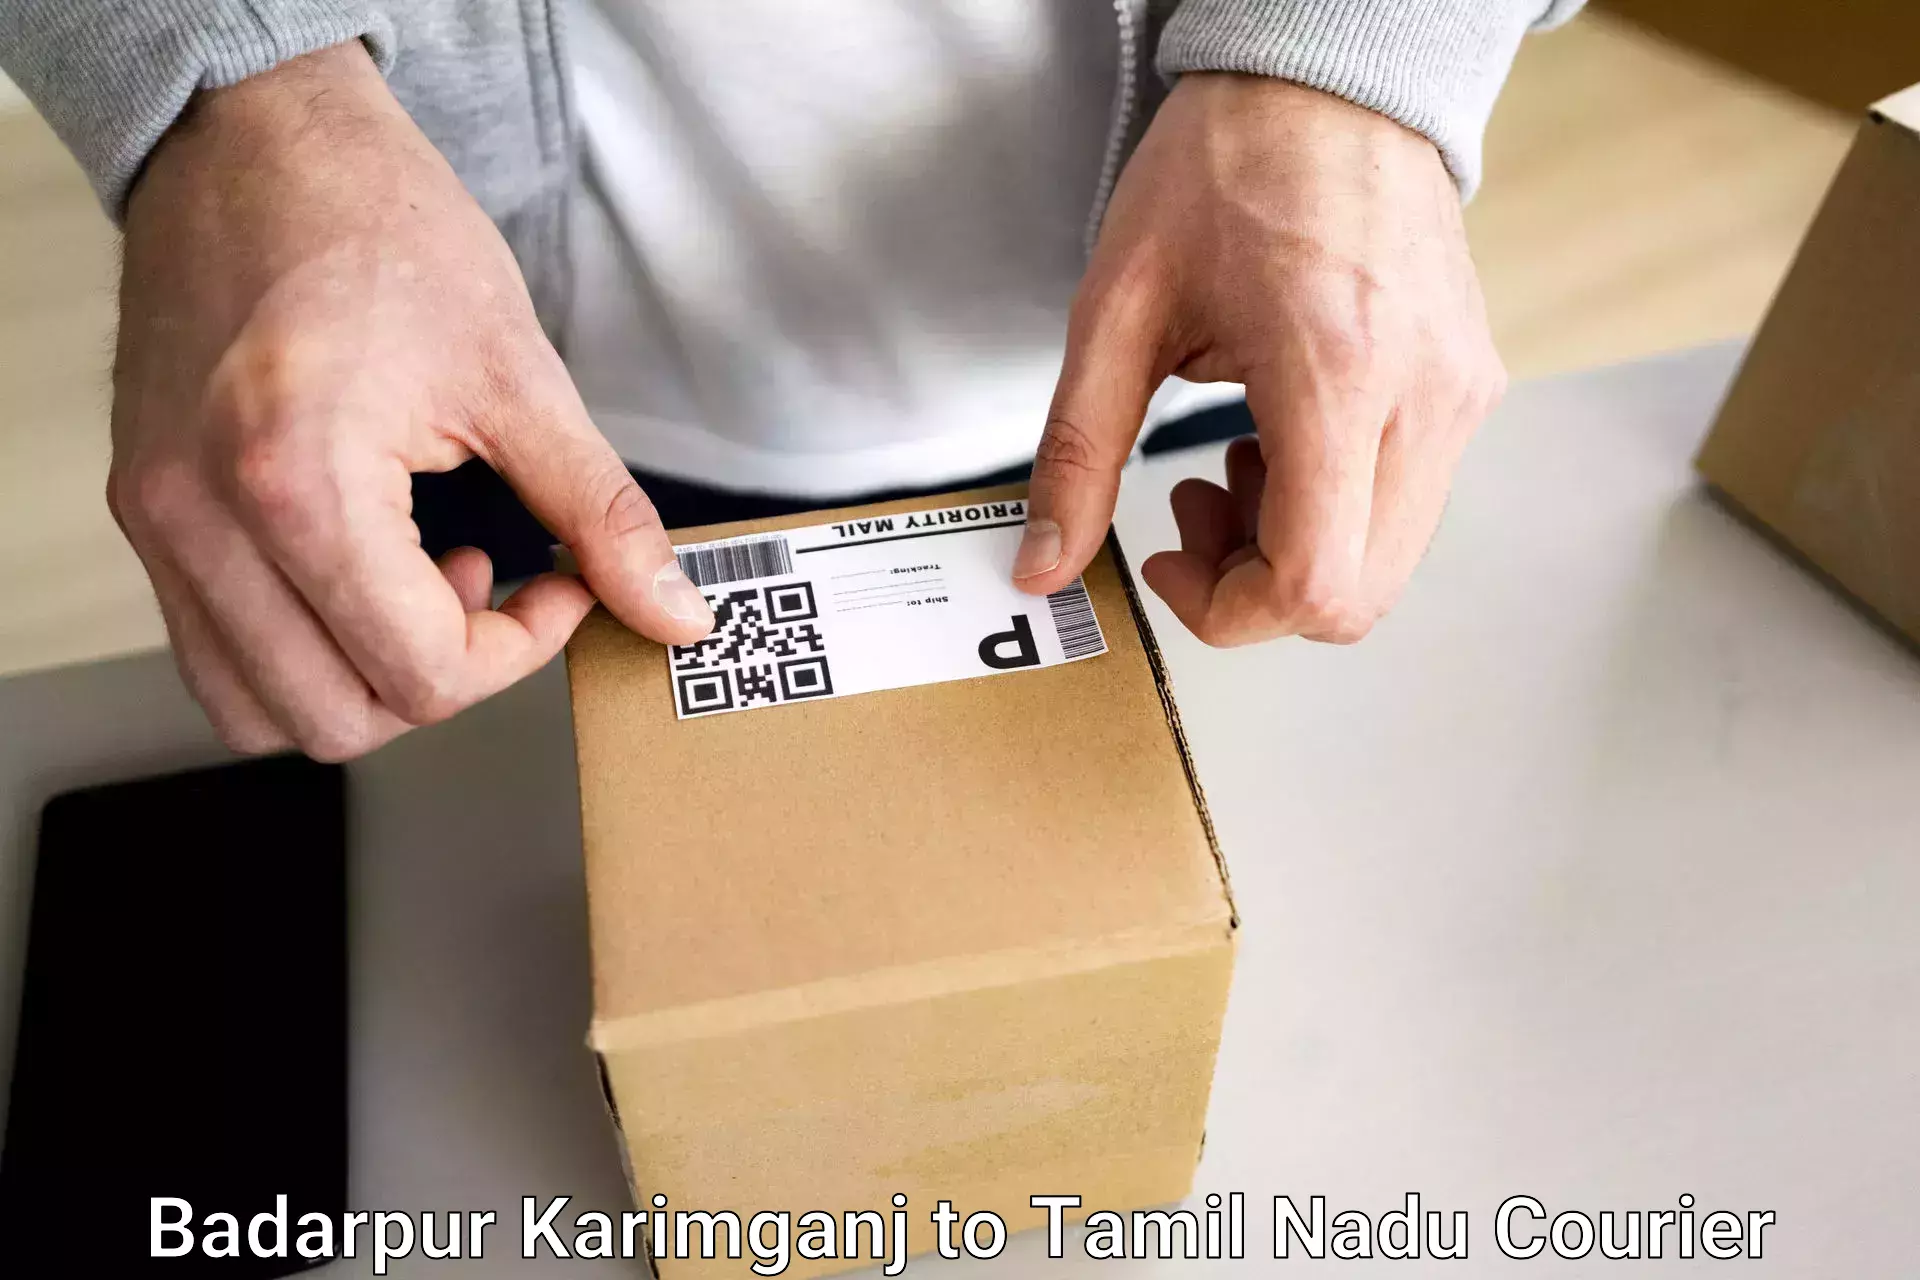 Luggage shipment specialists Badarpur Karimganj to Tirupur